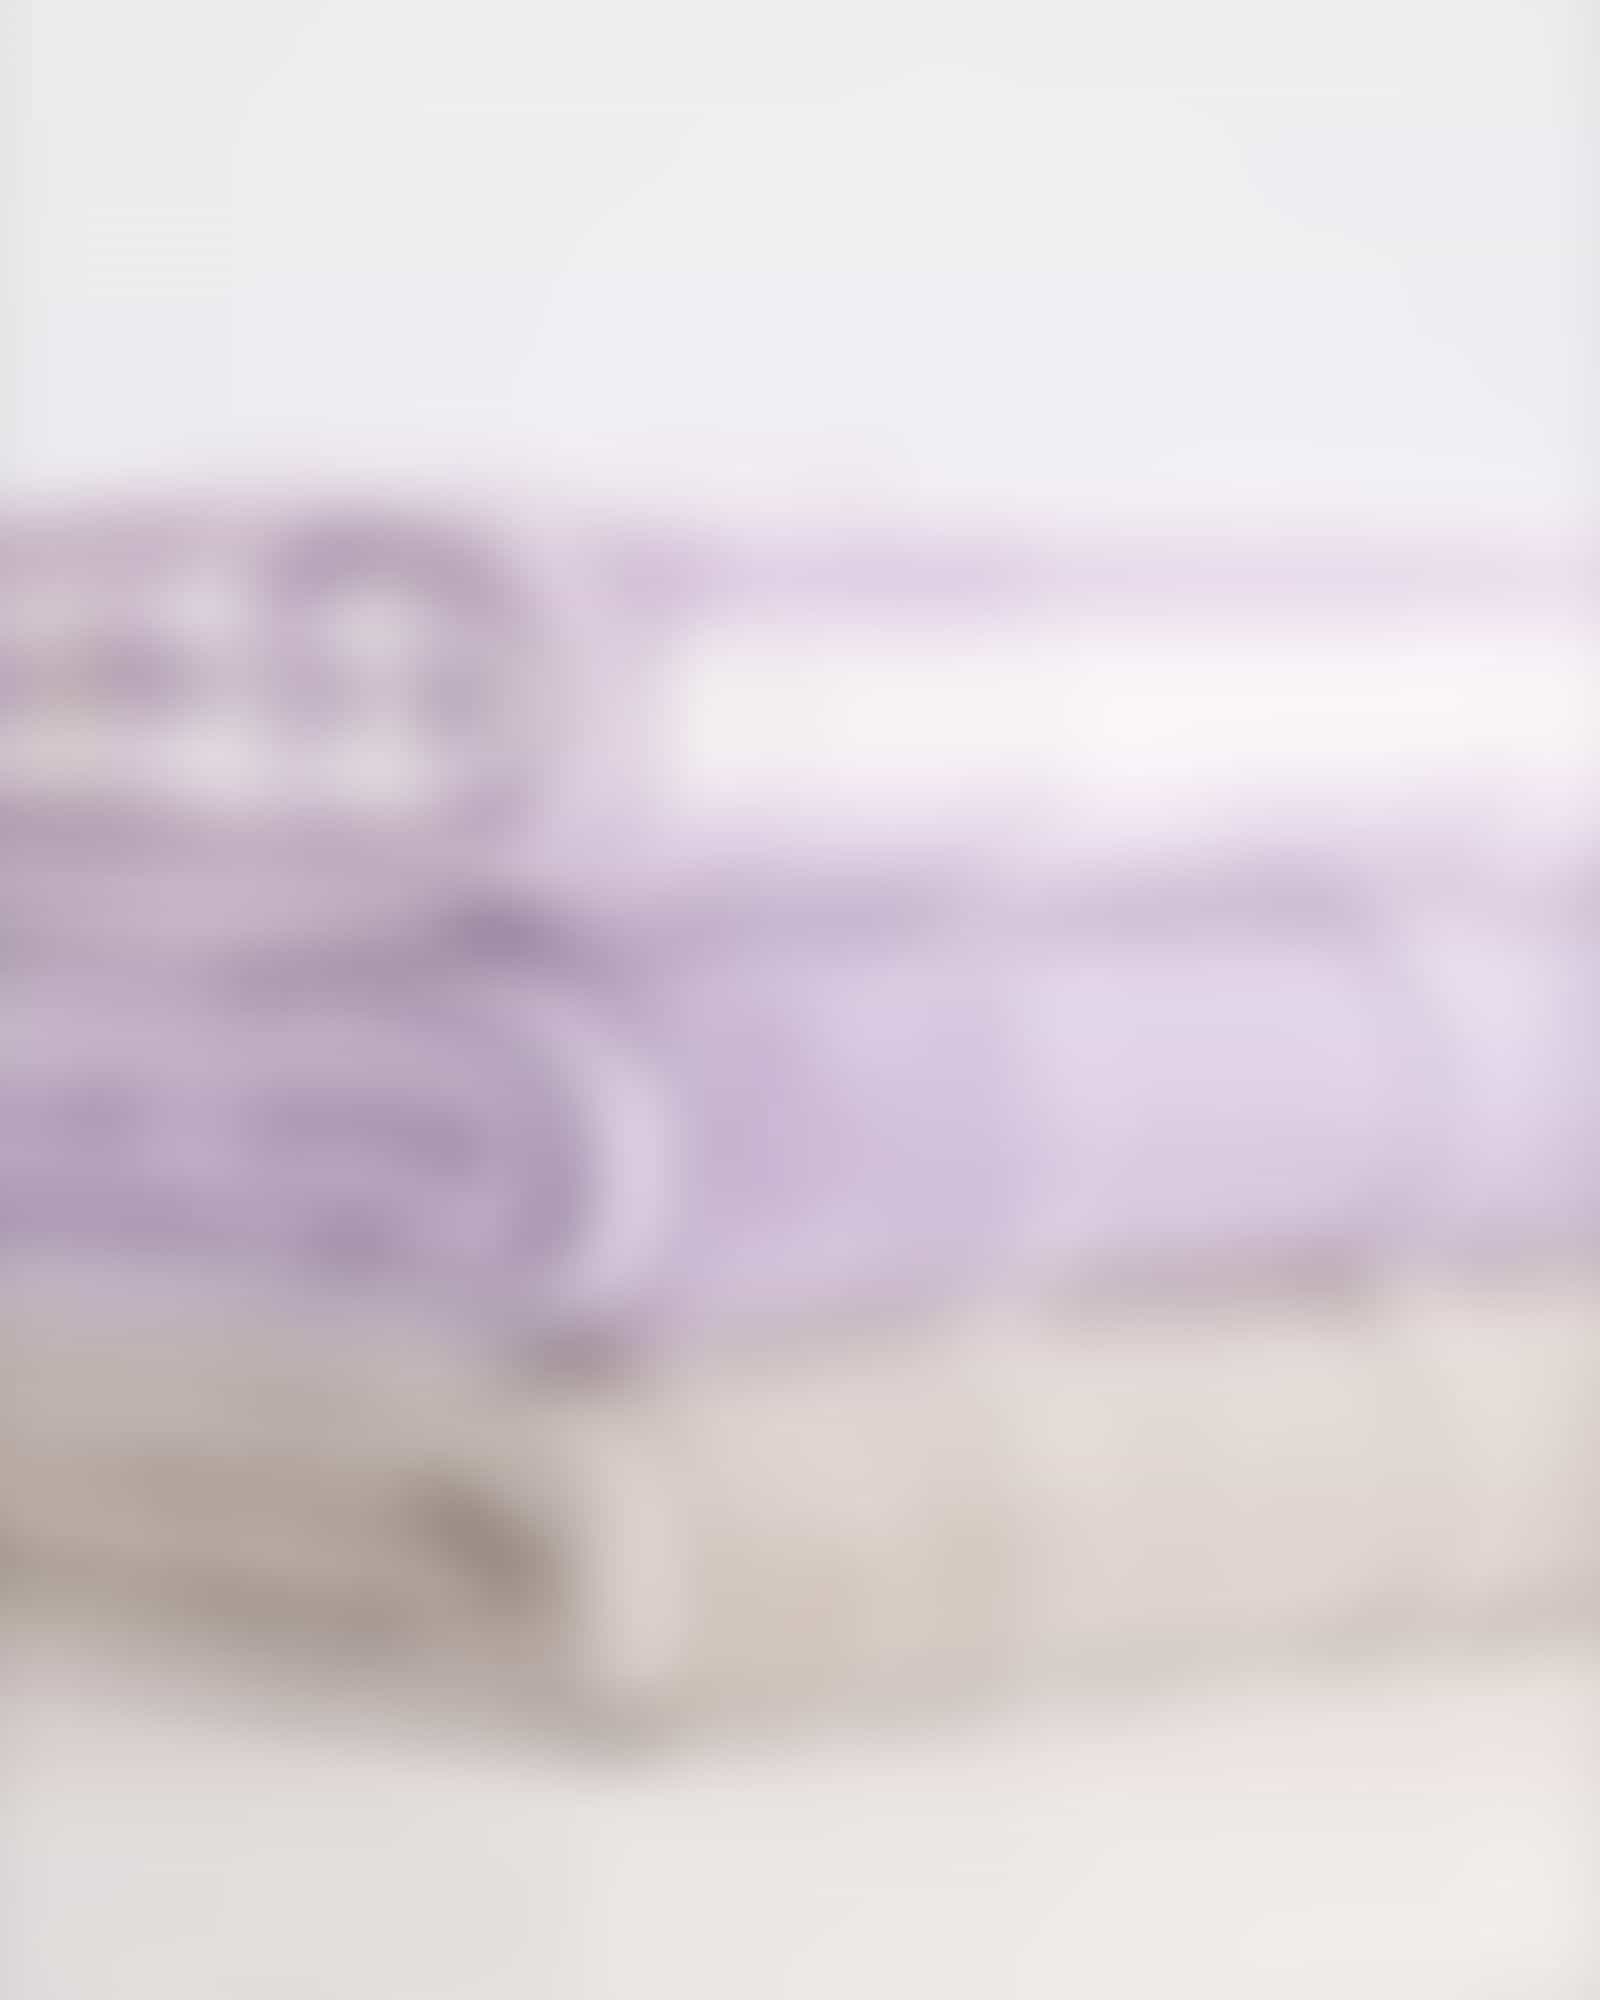 Cawö Noblesse Seasons Streifen 1083 - Farbe: lavendel - 88 Waschhandschuh 16x22 cm